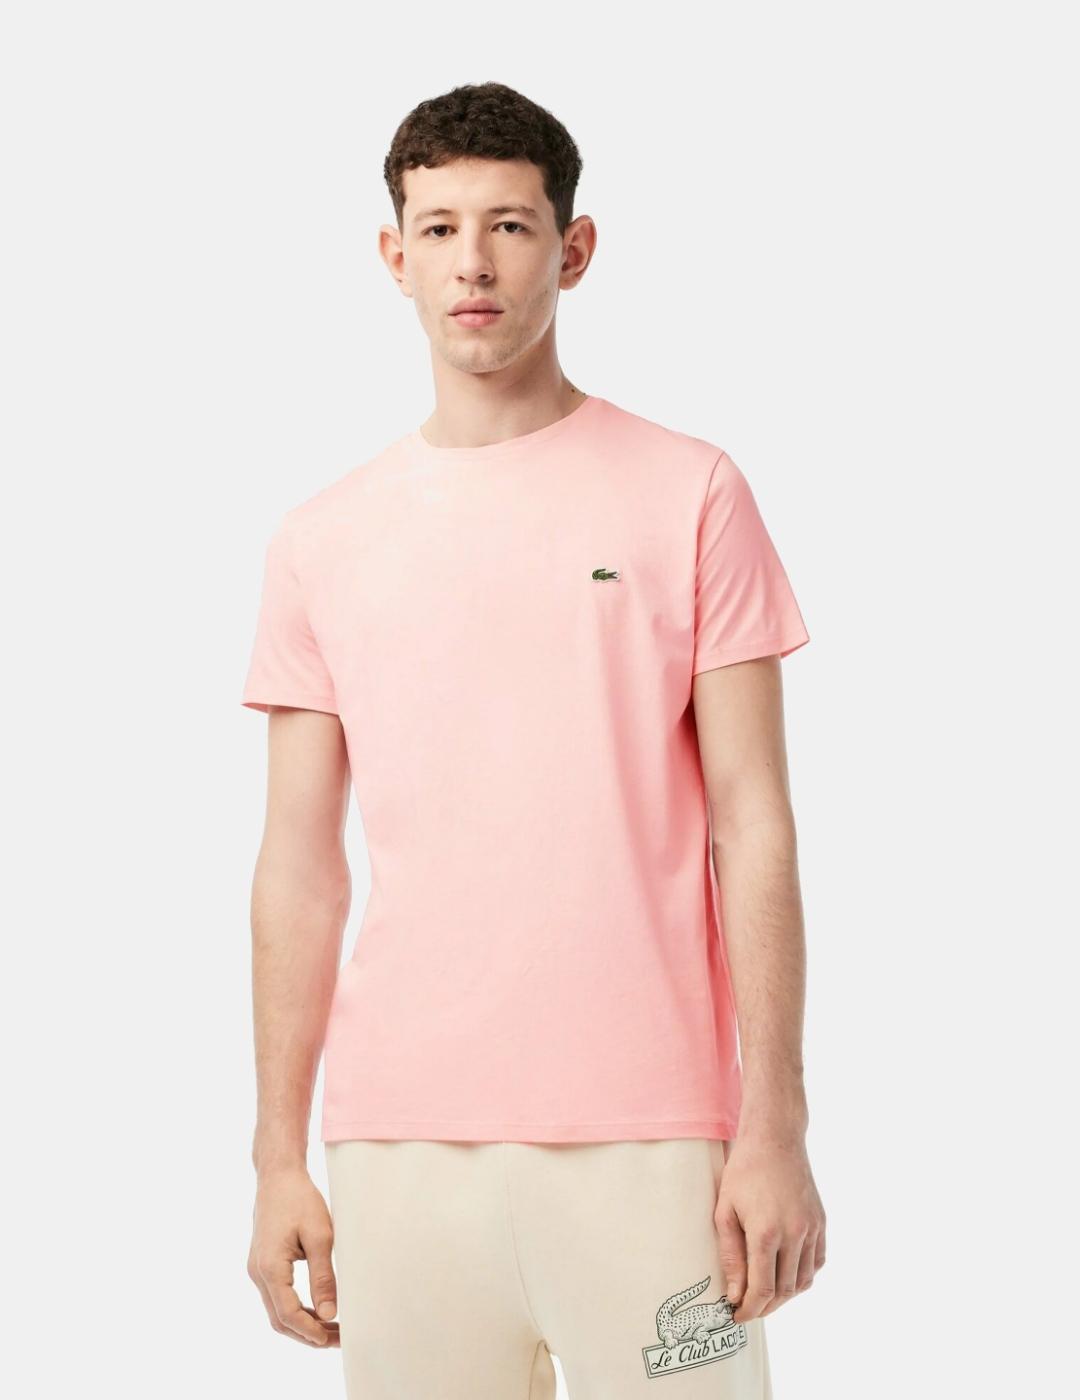 Camiseta Lacoste Regular rosa para hombre